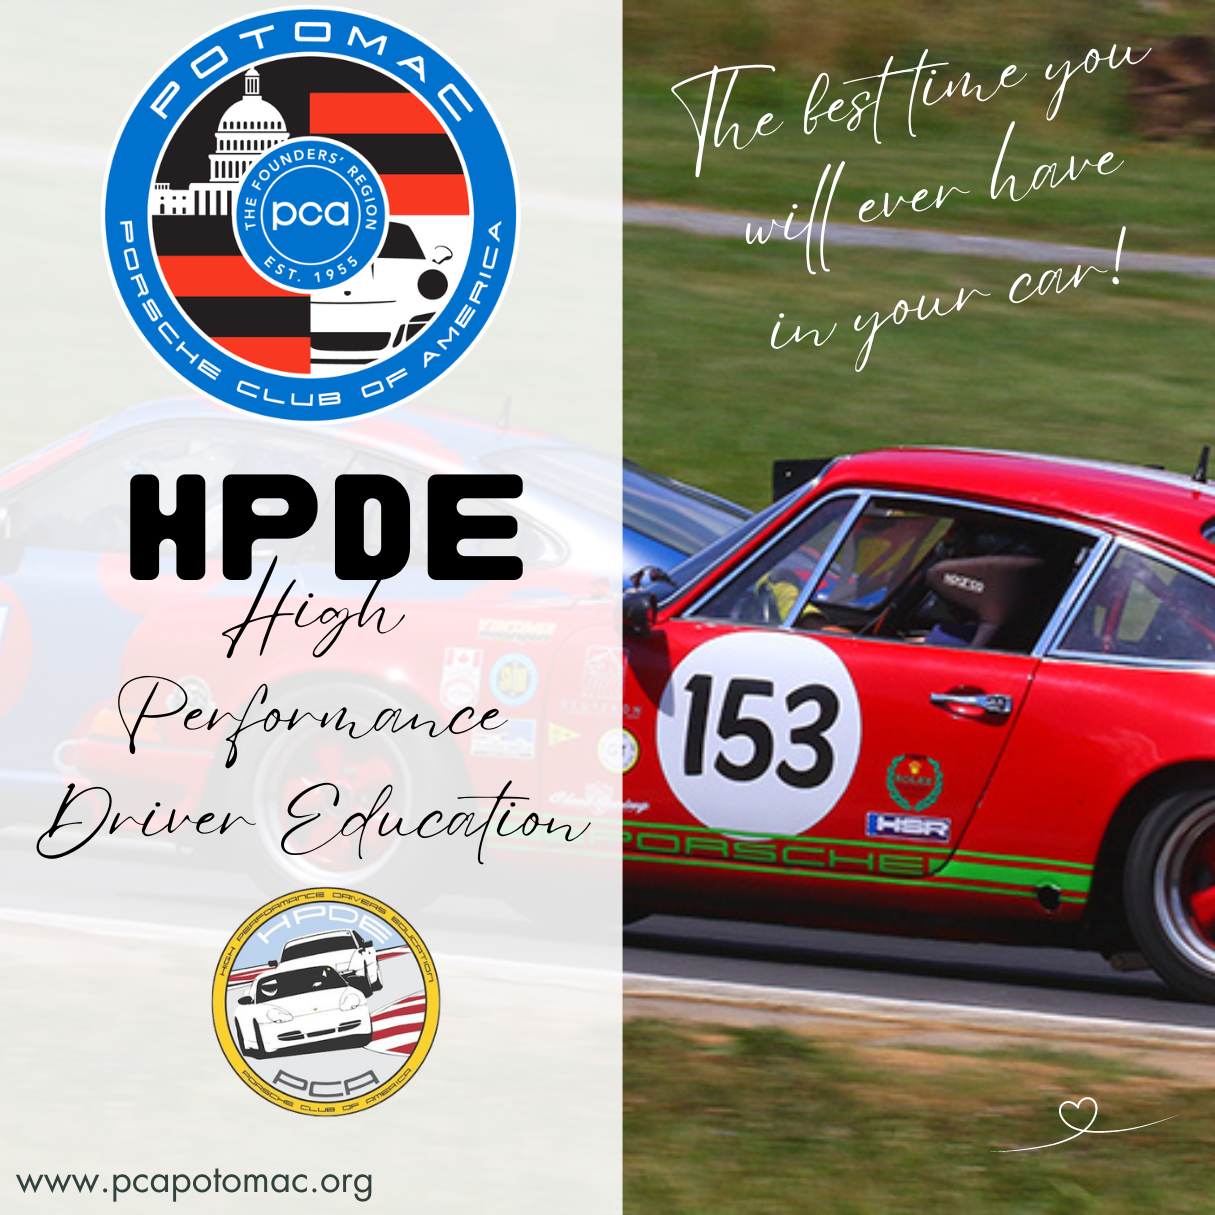 Porsche Club of America - Potomac - High Performance Driver Education - Summit Point